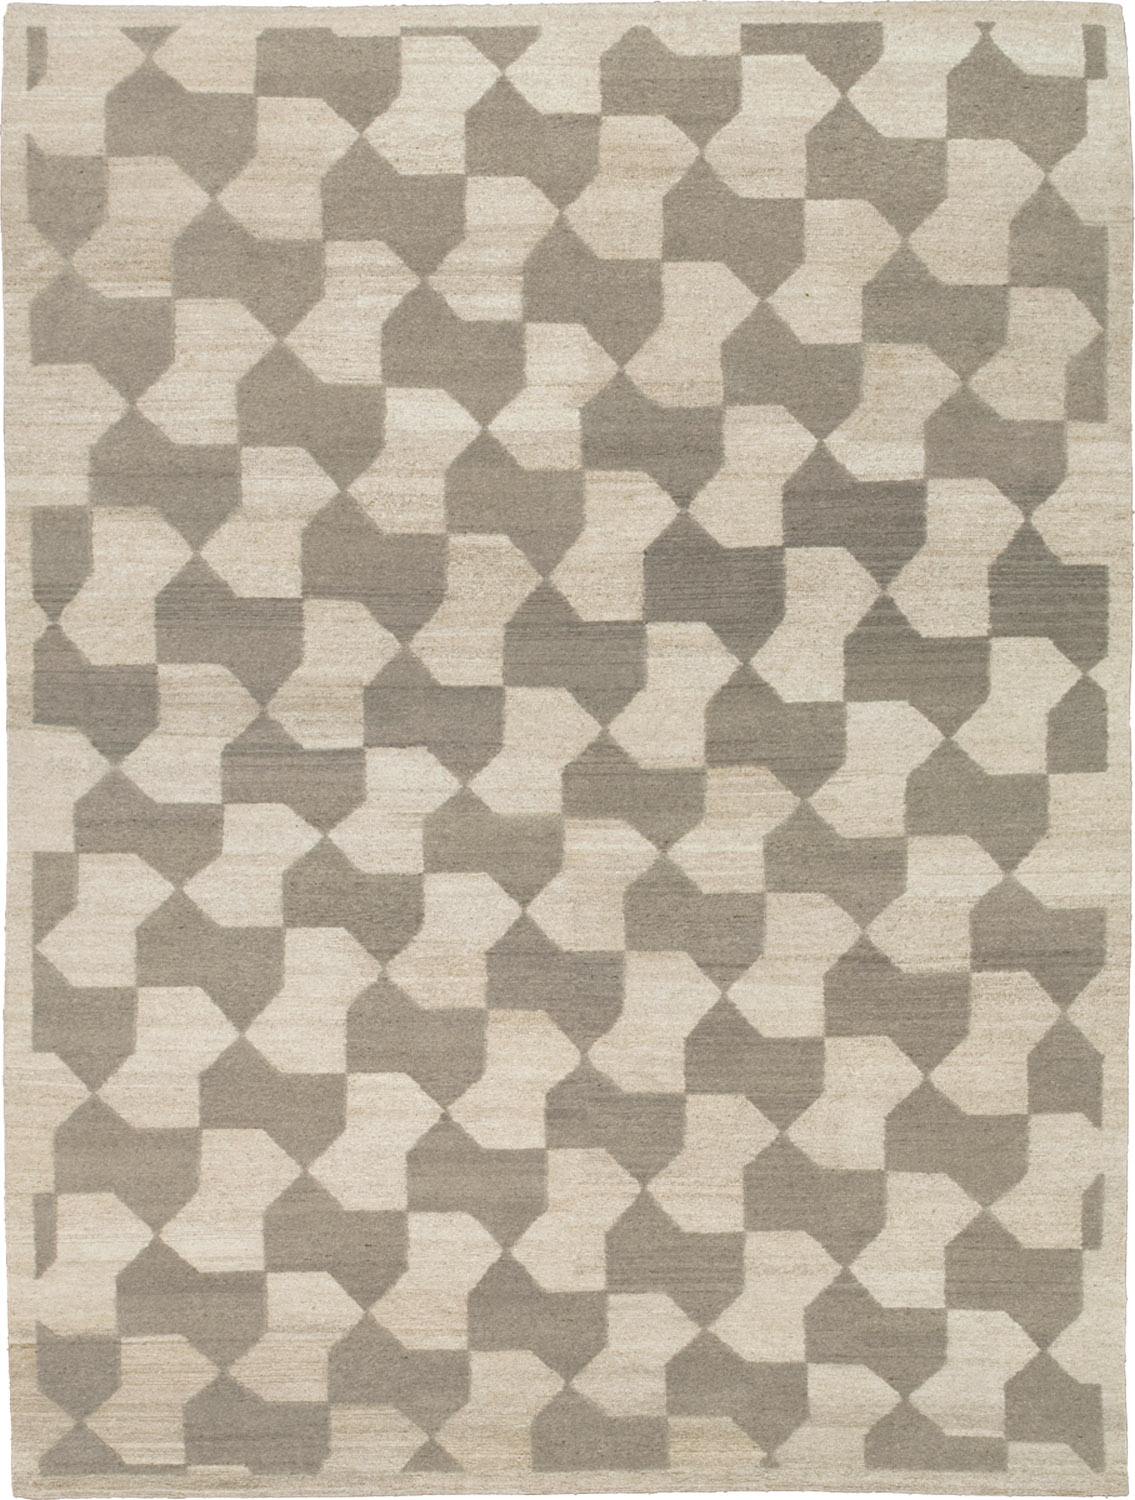 26092 Bow Tie Design | Custom Modern & 20th Century Design Carpet | FJ Hakimian | Carpet Gallery in NYC